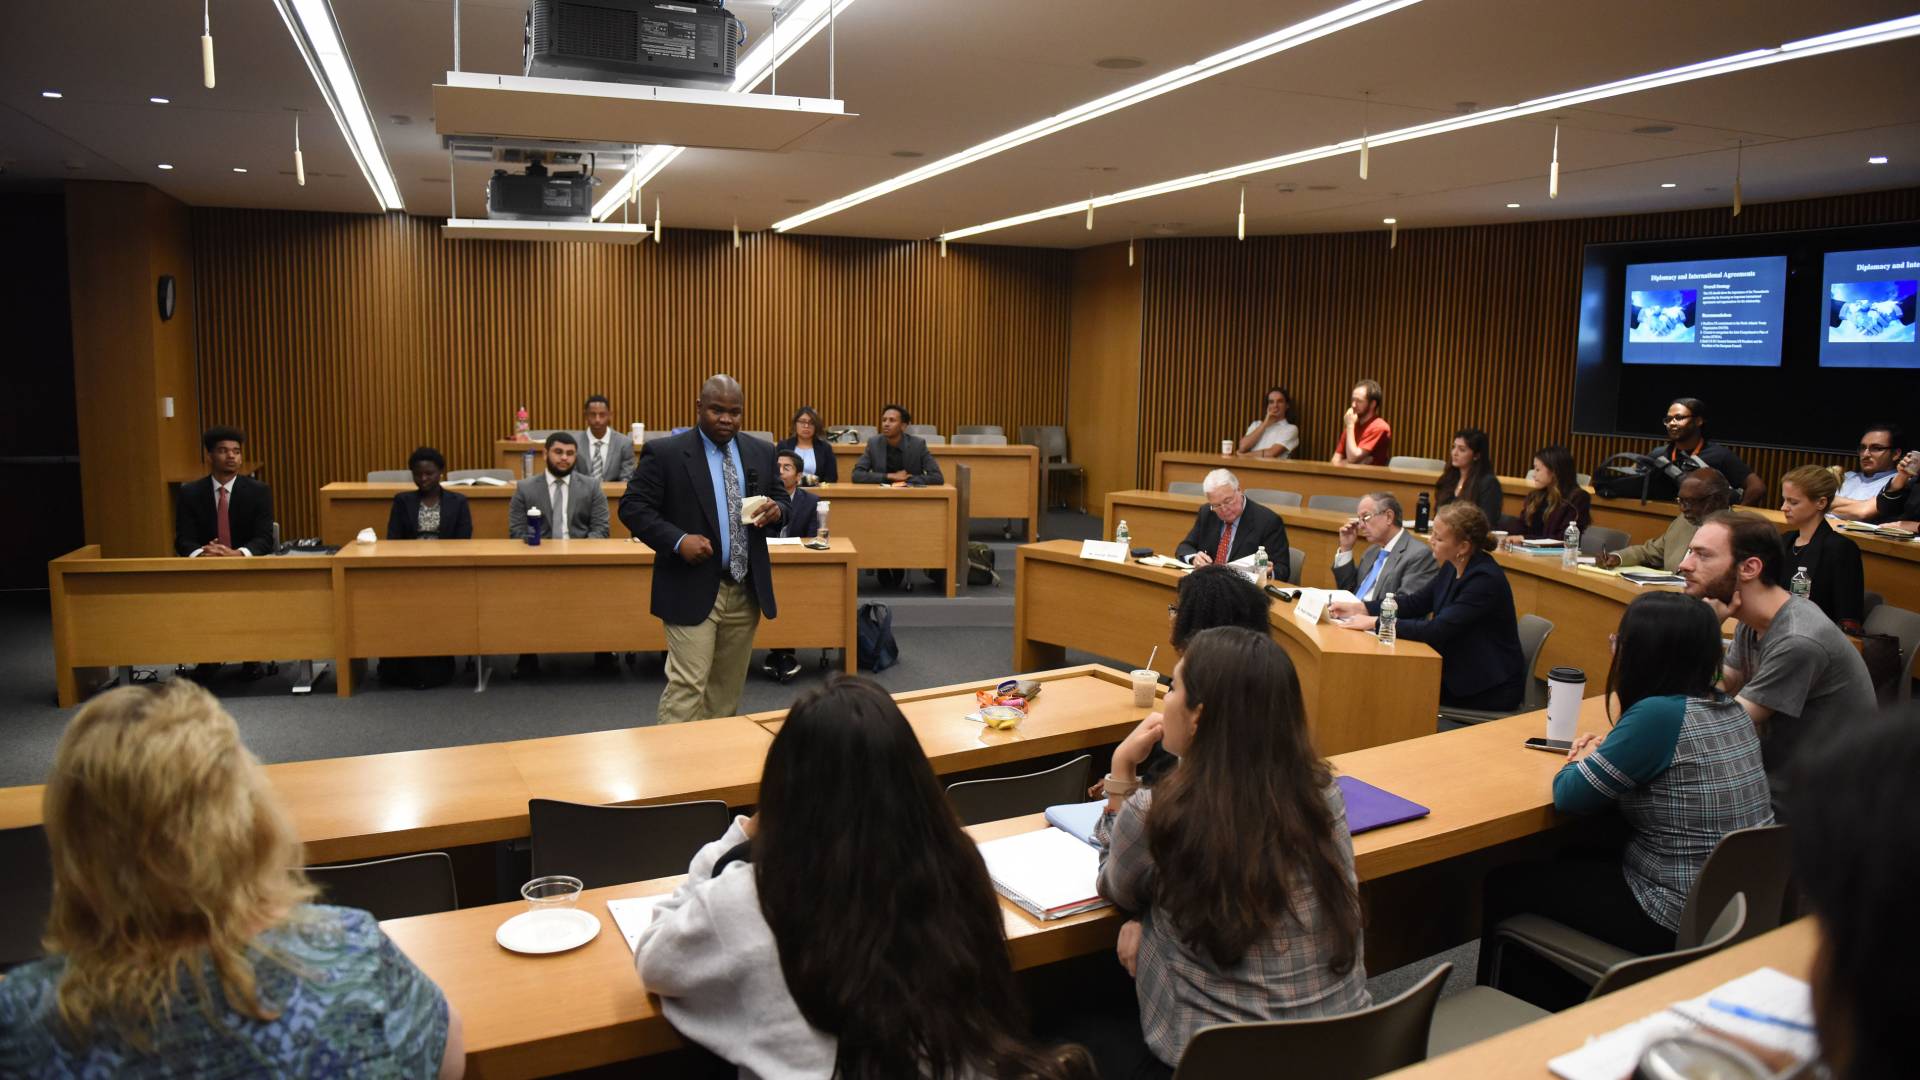 A man speaks to an auditorium-style classroom full of undergraduates